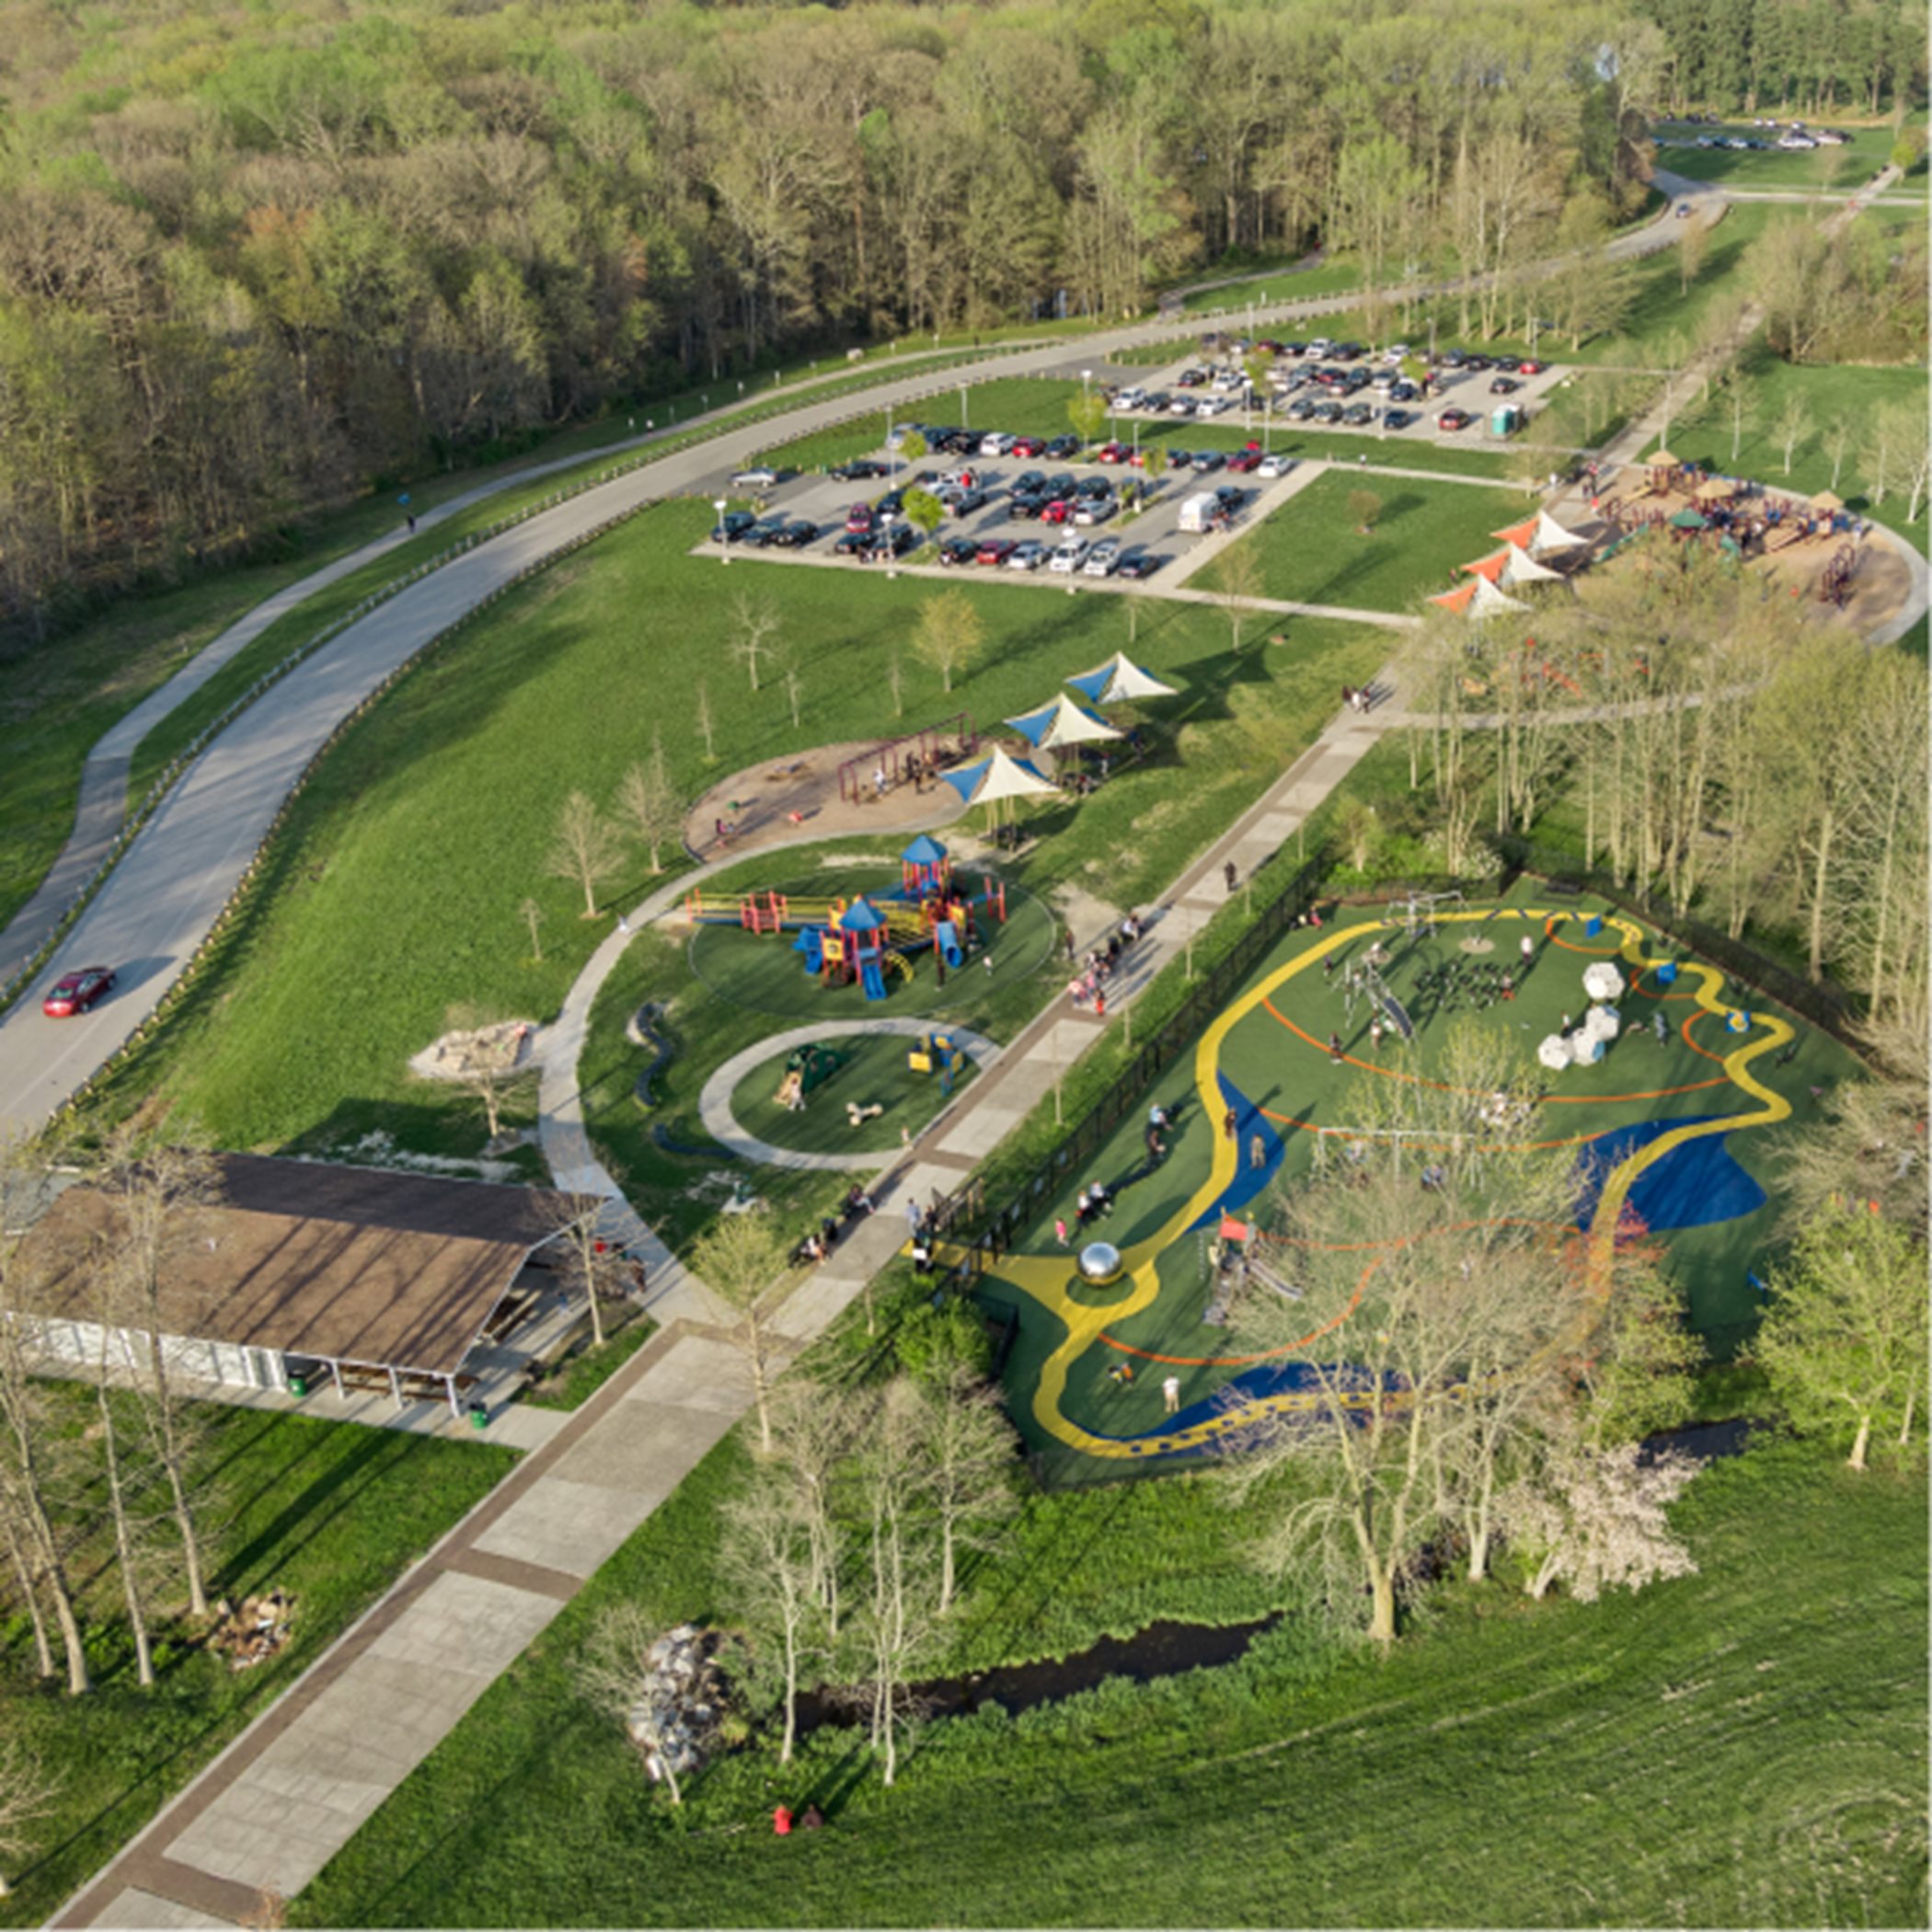 Garrisons Lake Aerial view of playground